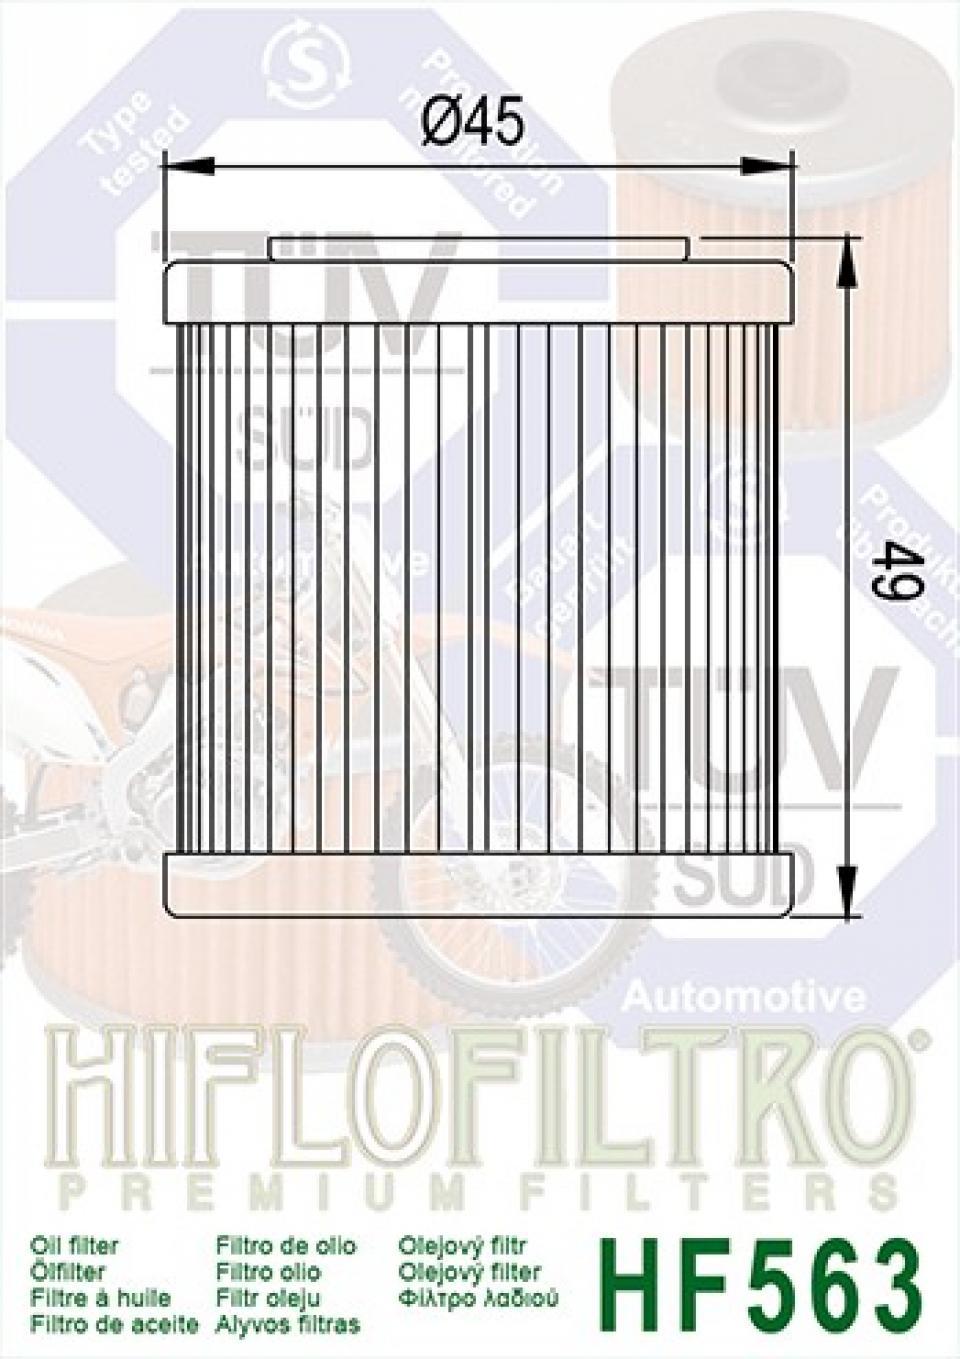 Filtre à huile Hiflo Filtro pour Moto Husqvarna 510 SMR 2008 à 2010 HF563 / 8000B0593